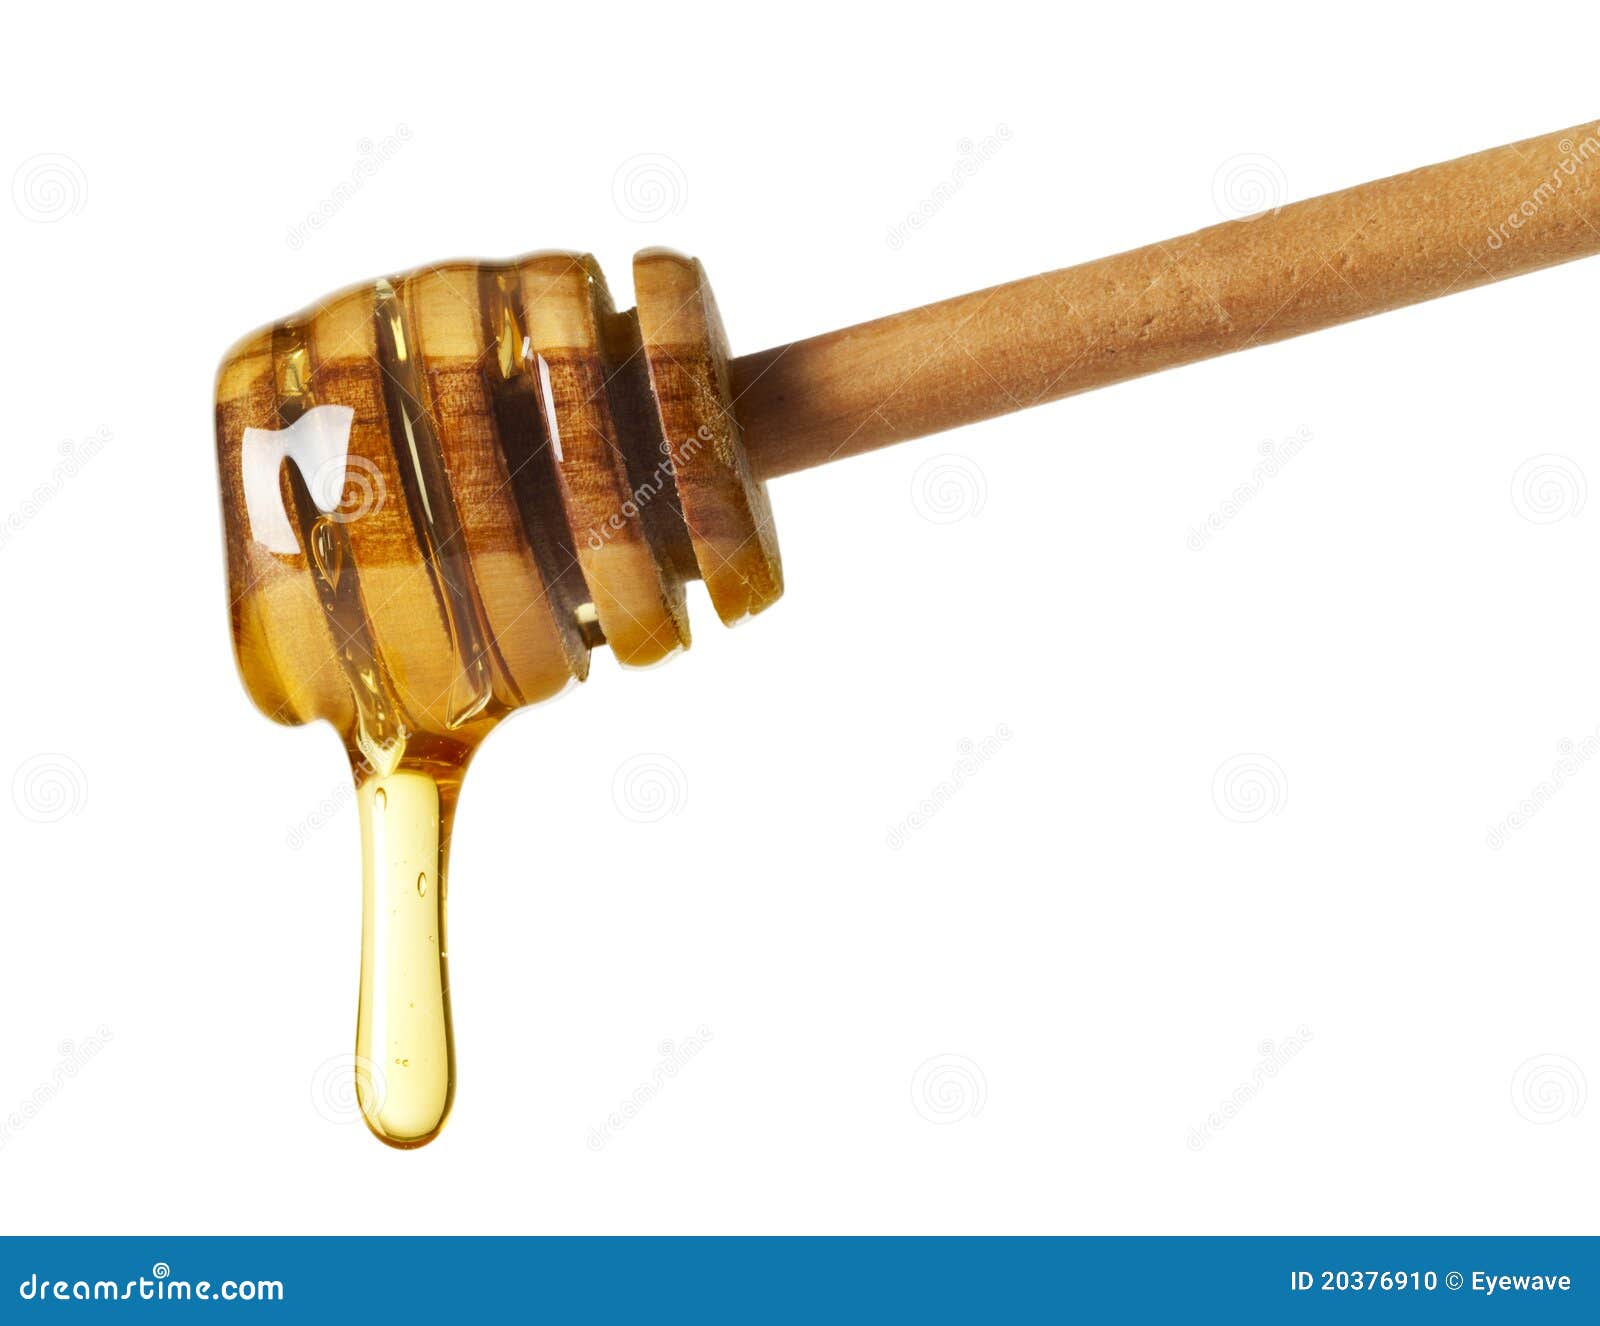 honey dripping clipart - photo #29